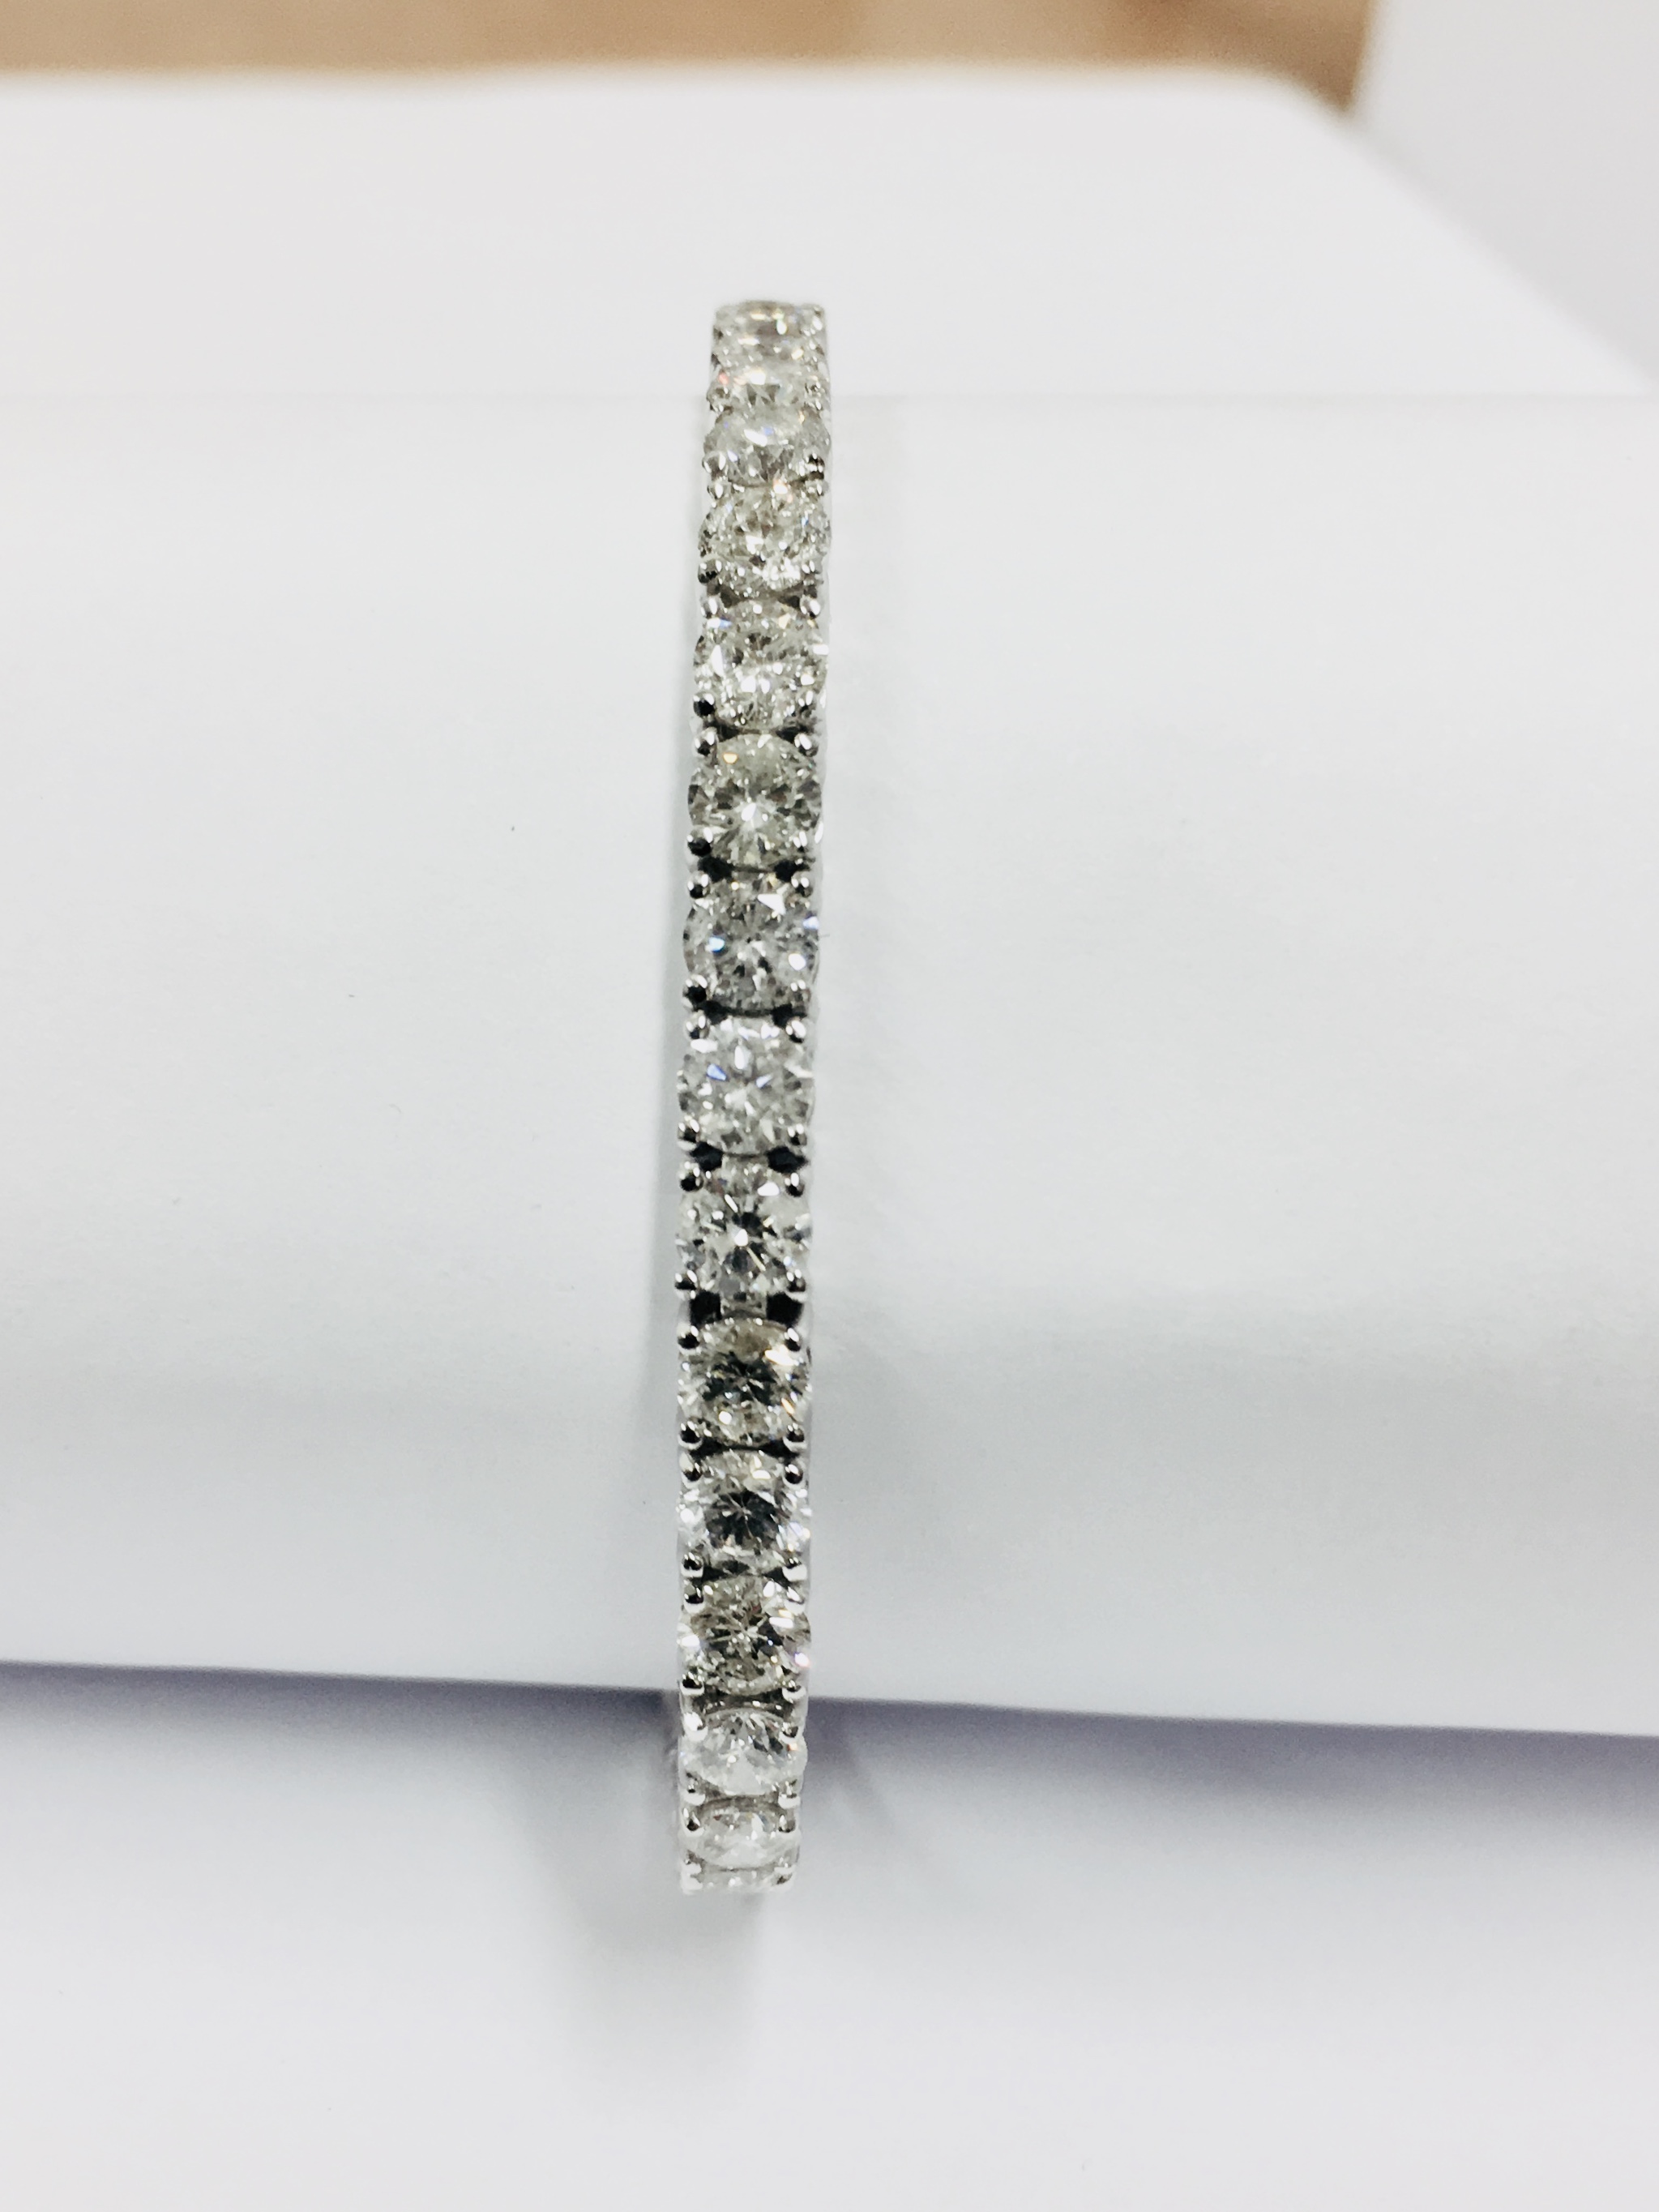 8.00ct Diamond tennis bracelet set with brilliant cut diamonds of G colour - Image 10 of 42